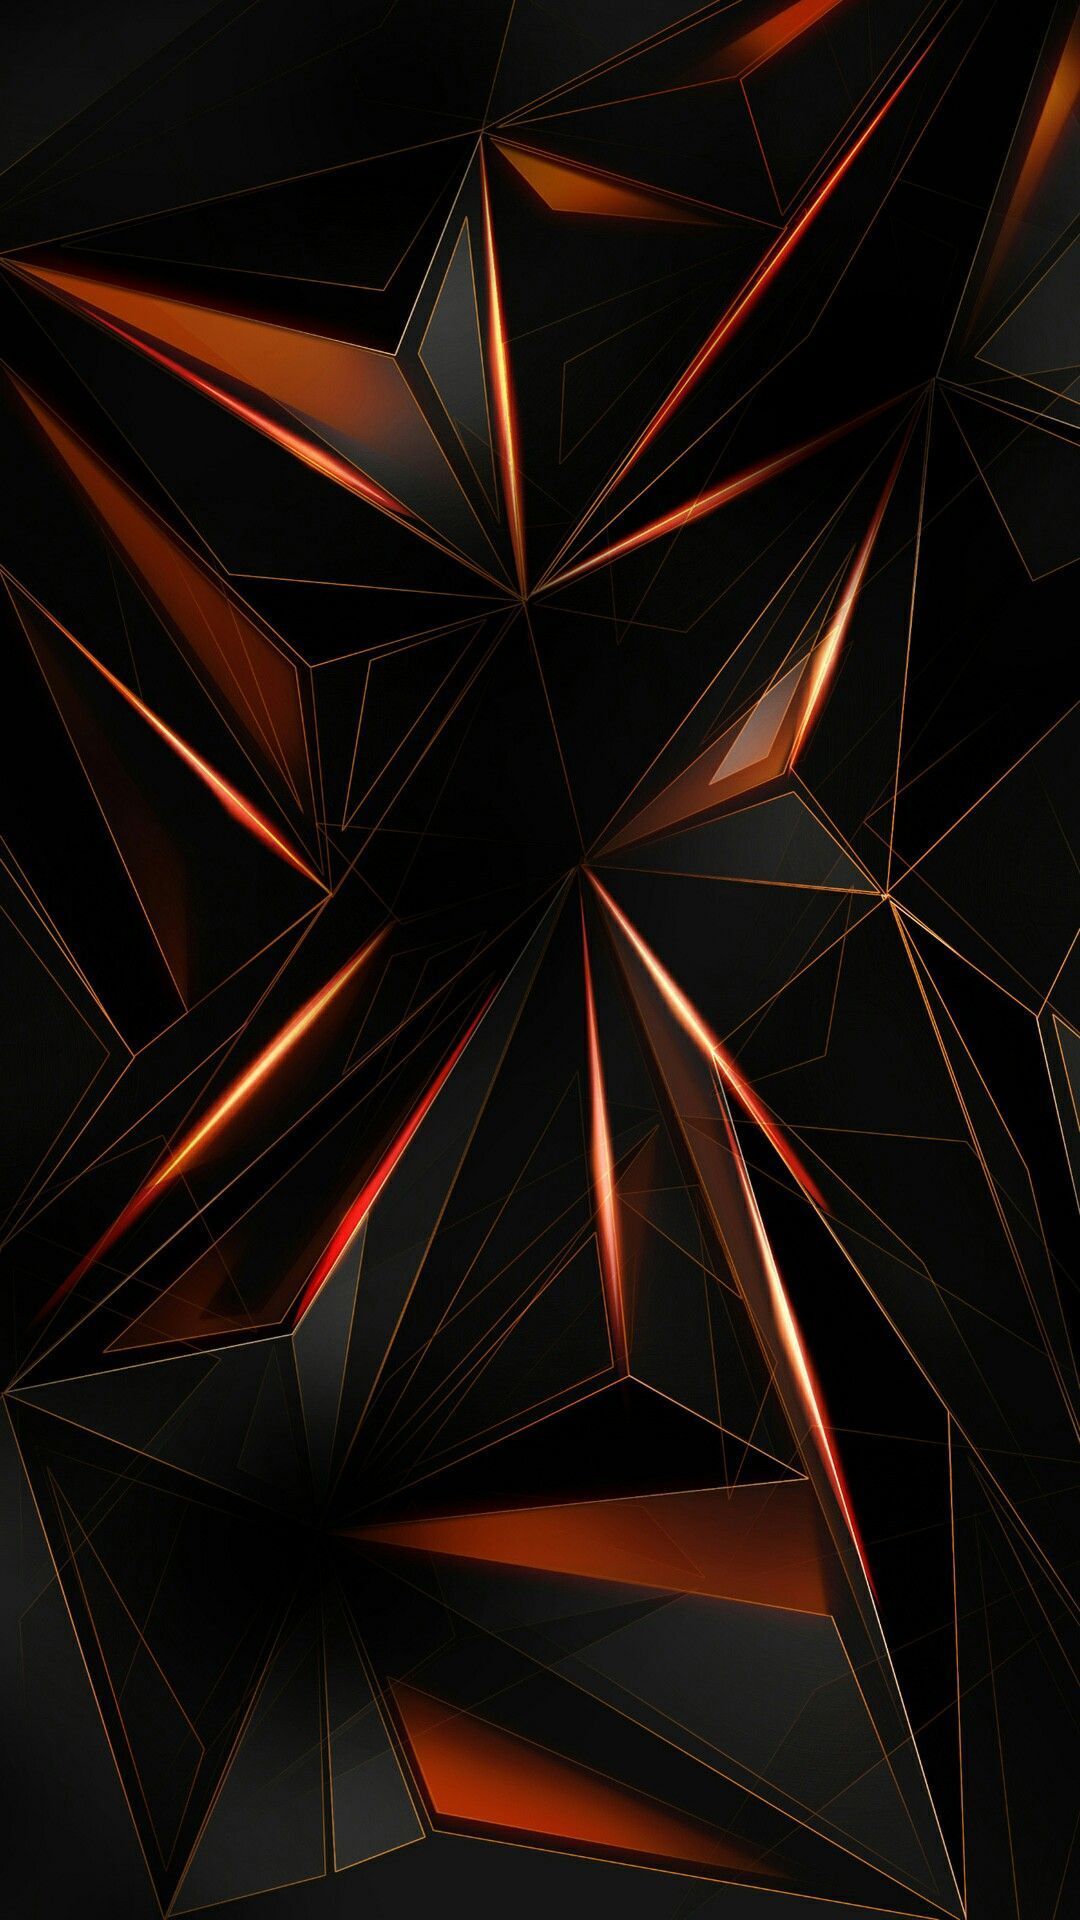 Black Orange Background. iPhone wallpaper orange, Technology wallpaper, iPhone wallpaper